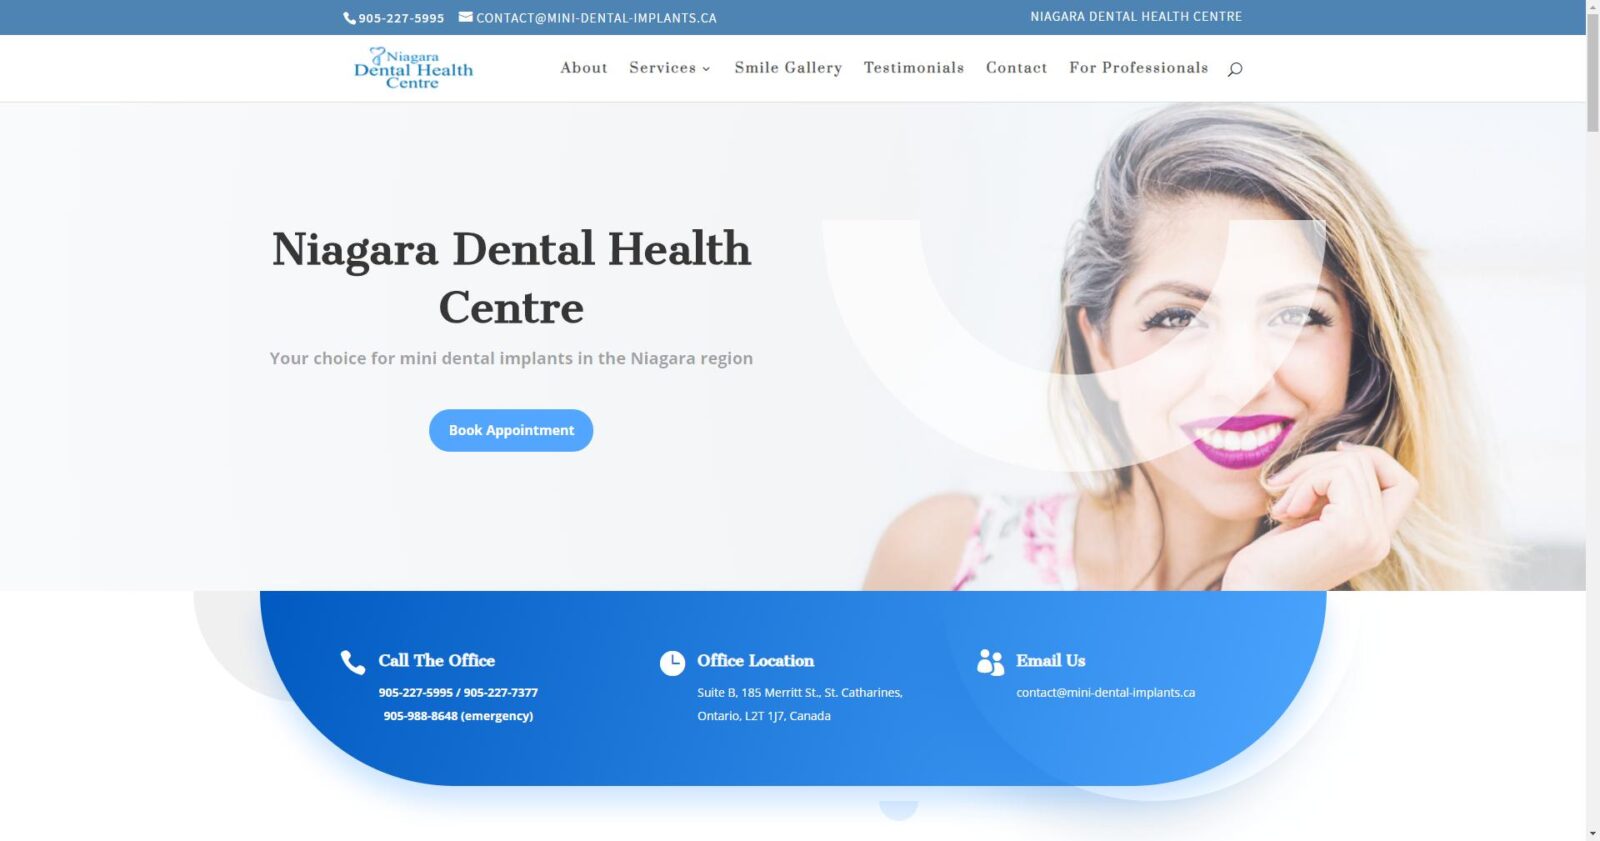 Niagara Dental Health Centre